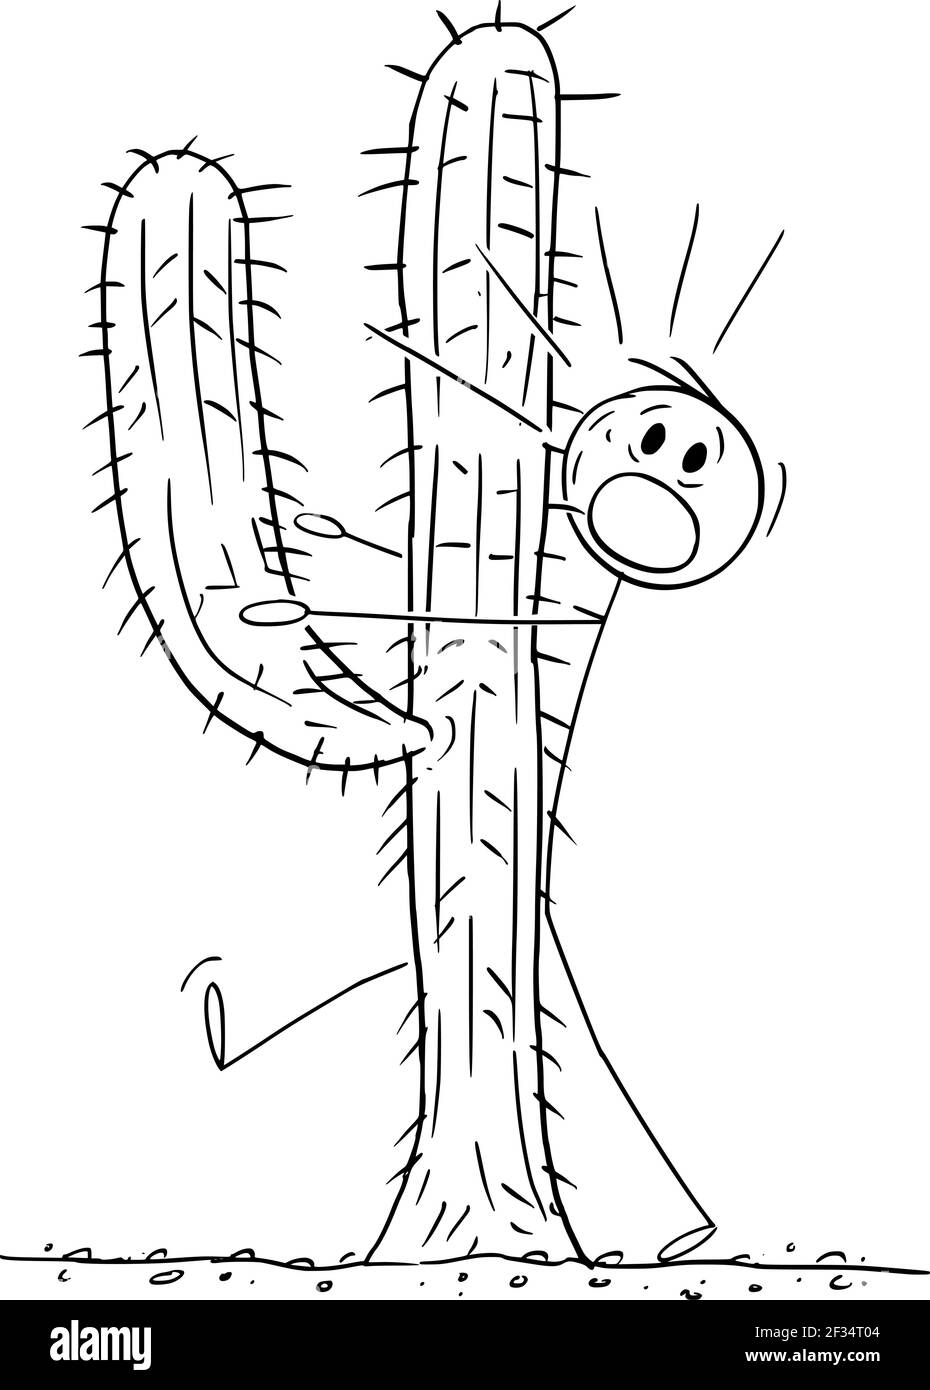 Man Walking in Desert Hit The Big Cactus, Vector Cartoon Stick Figure Illustrazione Illustrazione Vettoriale